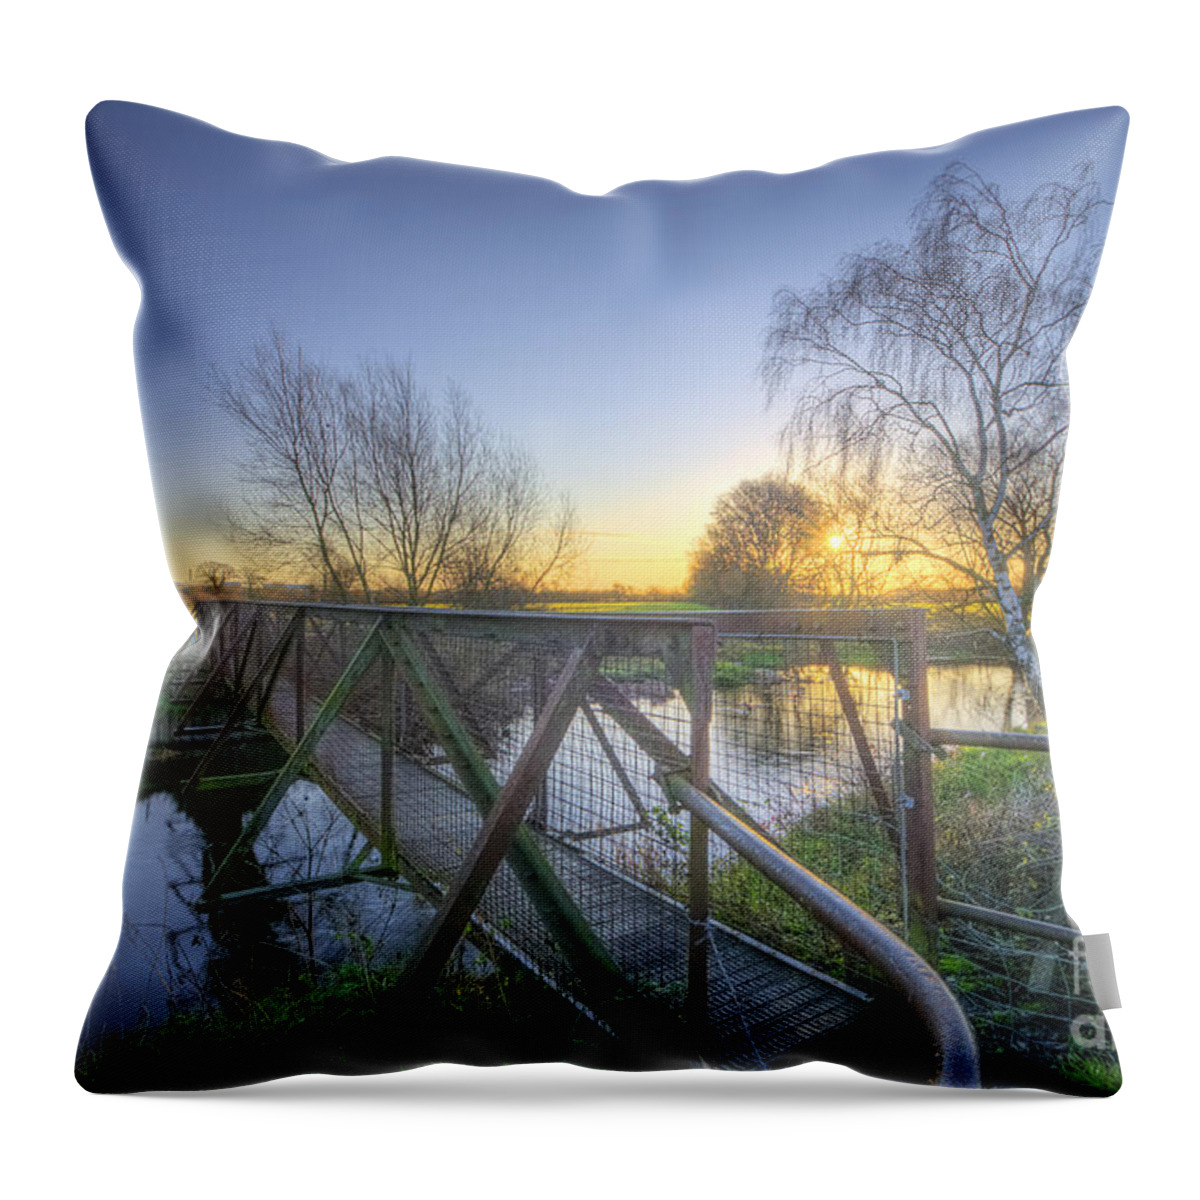 Landscape Throw Pillow featuring the photograph Narrow Iron Bridge by Yhun Suarez